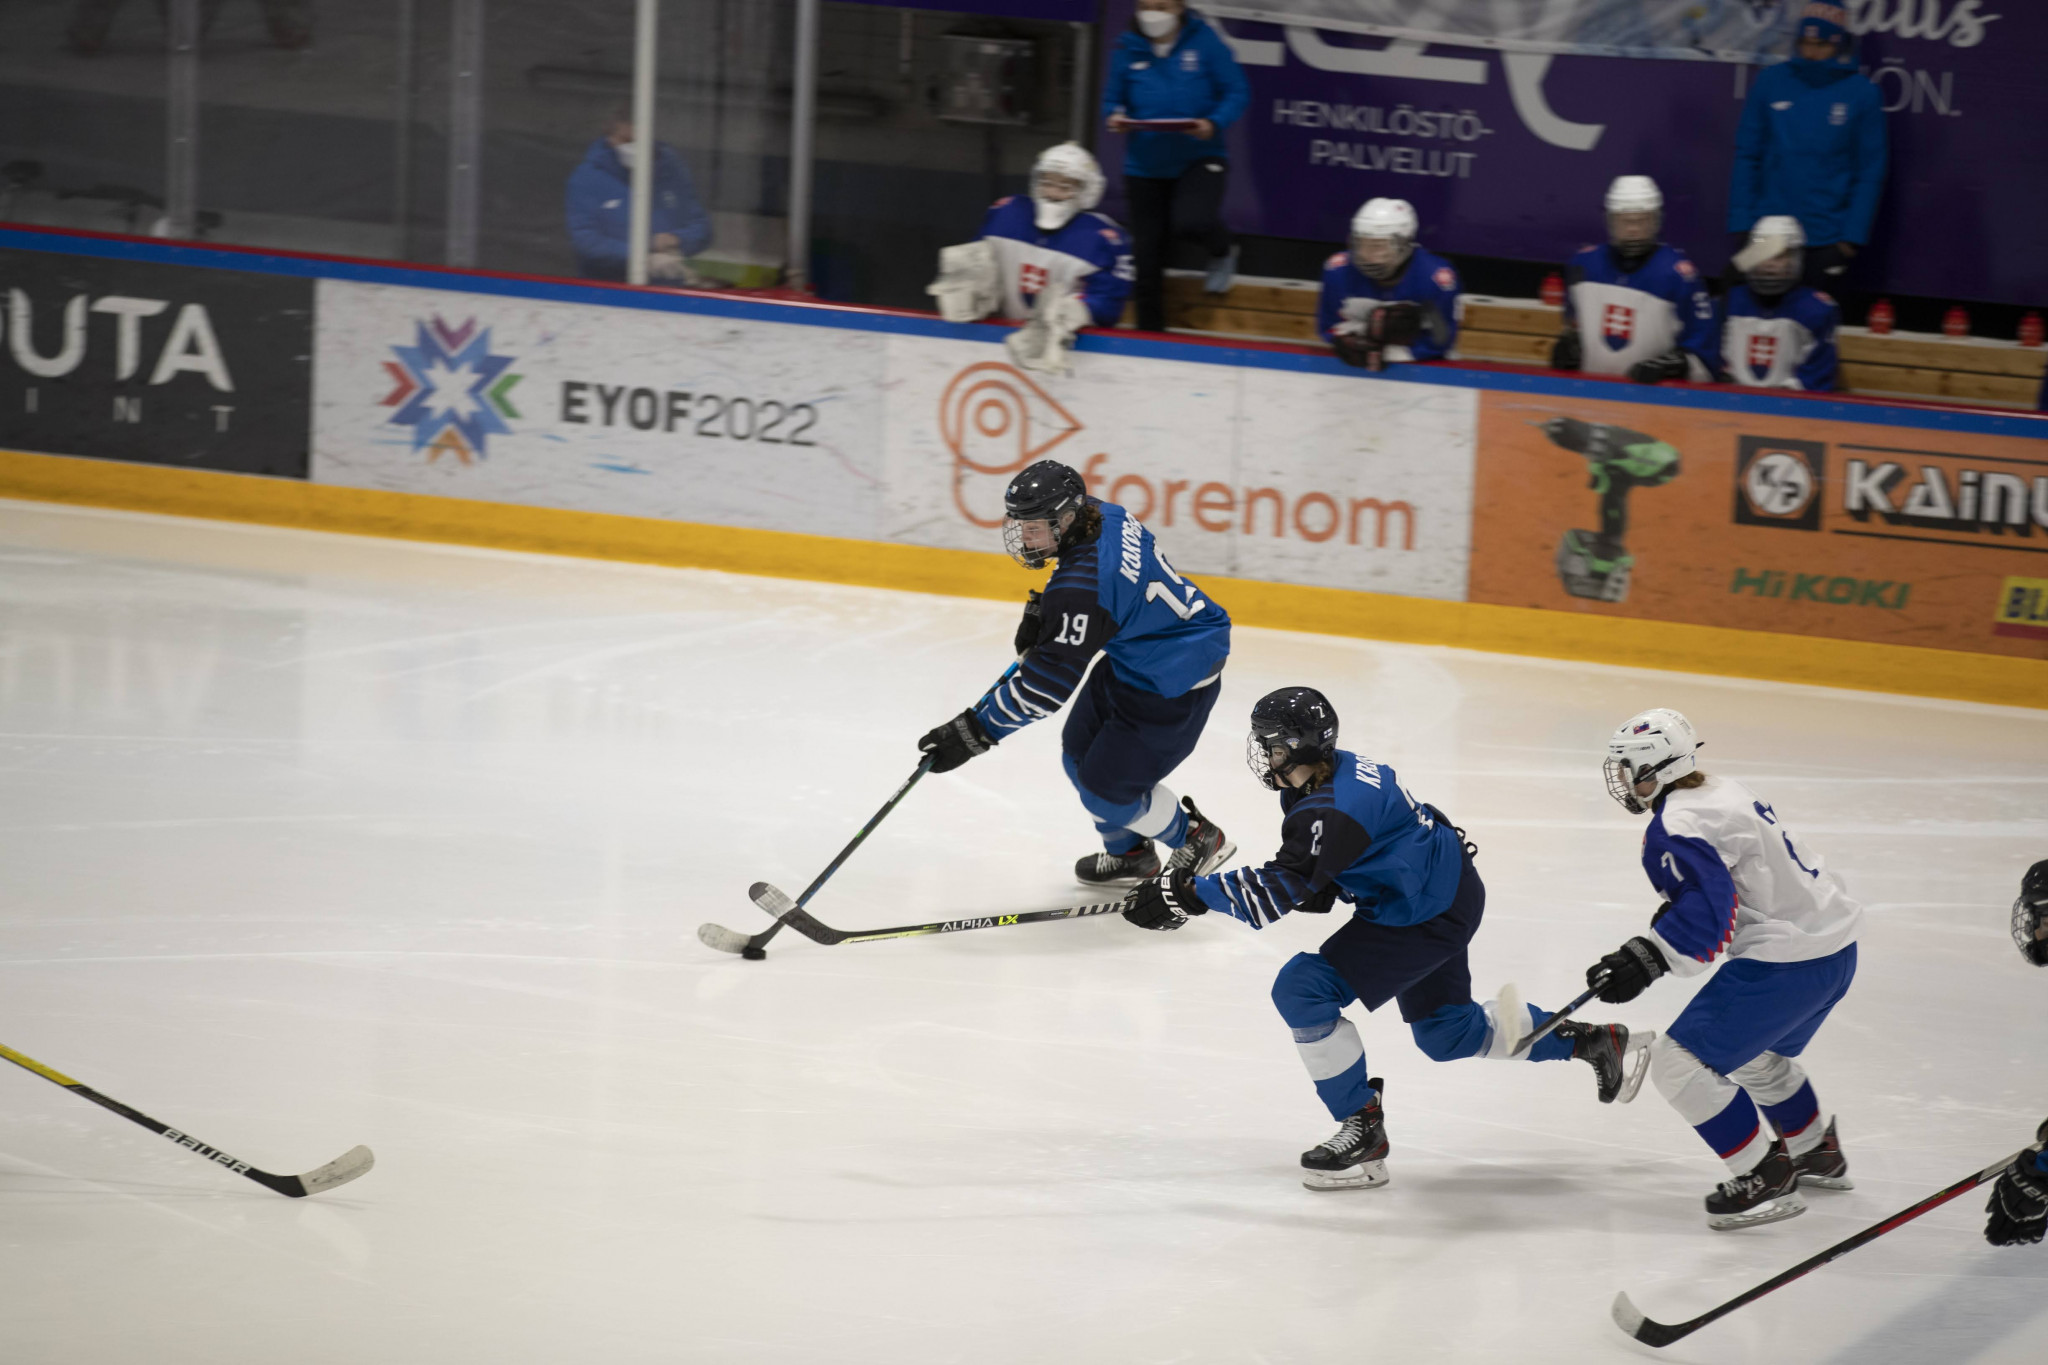 Hosts Finland struck a late winner to beat Slovakia 3-2 in the first match of the girls' ice hockey tournament ©Nejat Volkan Polat/EYOF Vuokatti 2022